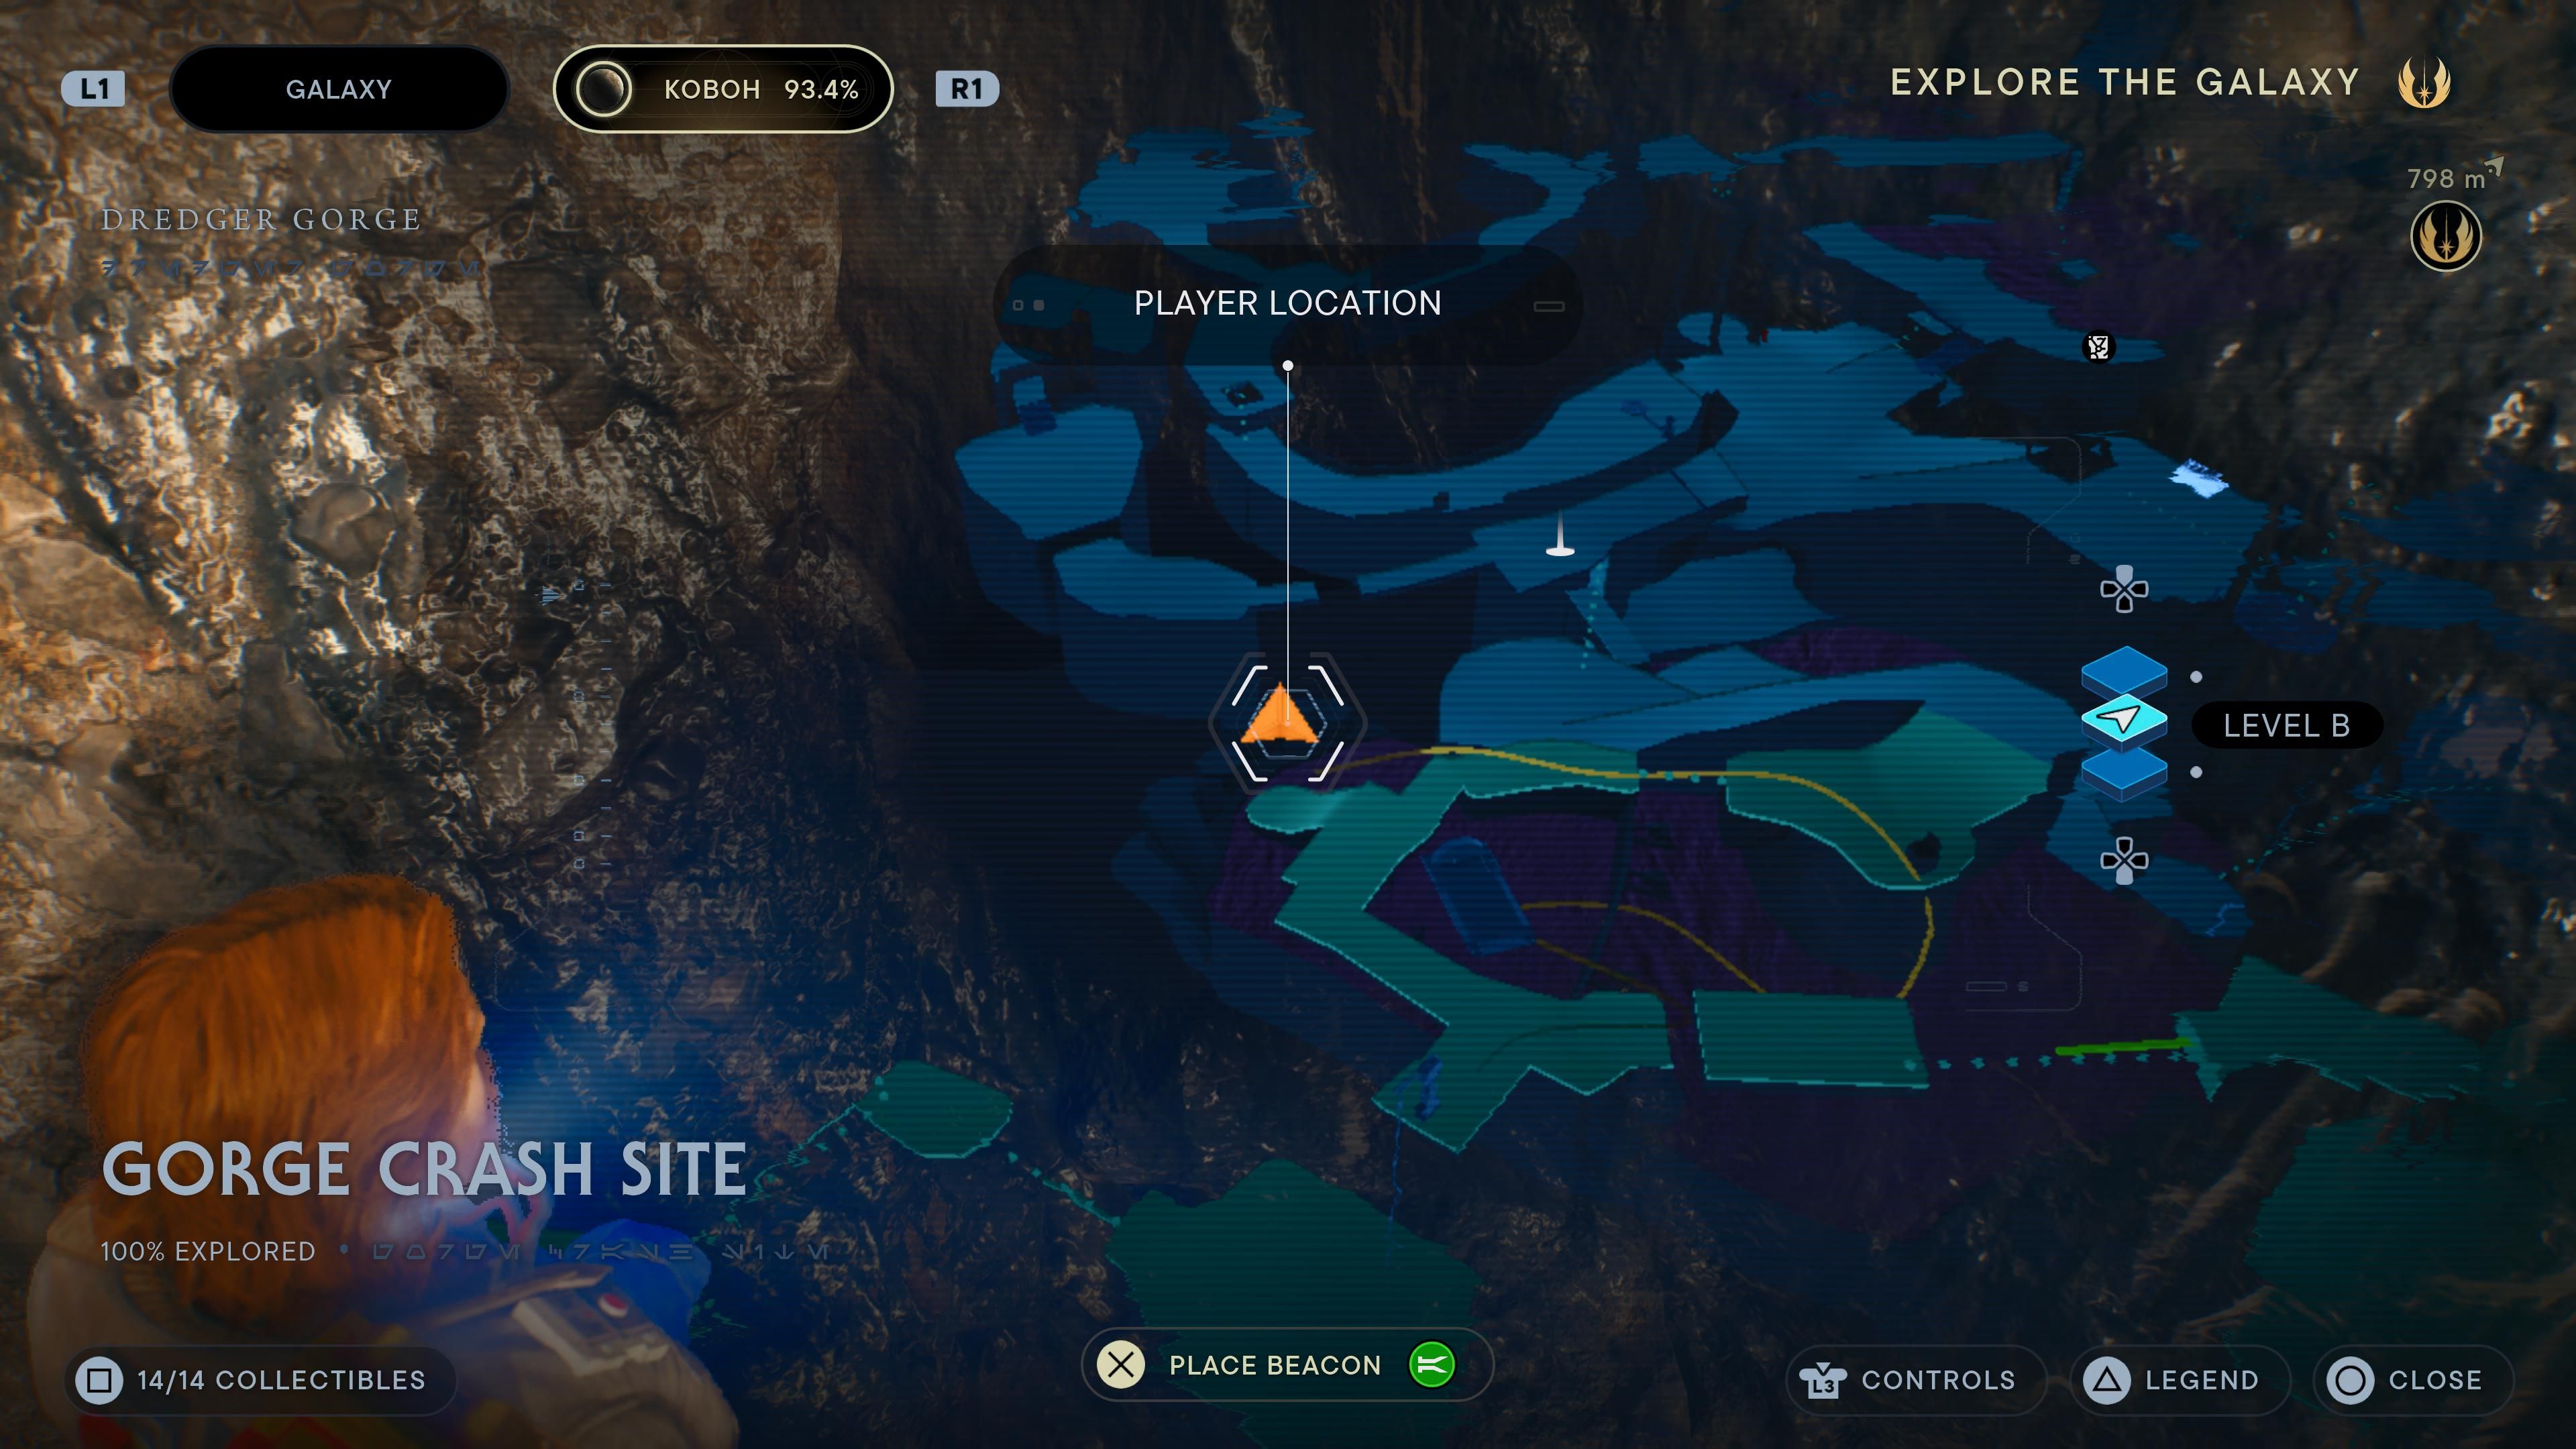 Map location of seed pod 4 in the Gorge Crash Site in Jedi Survivor